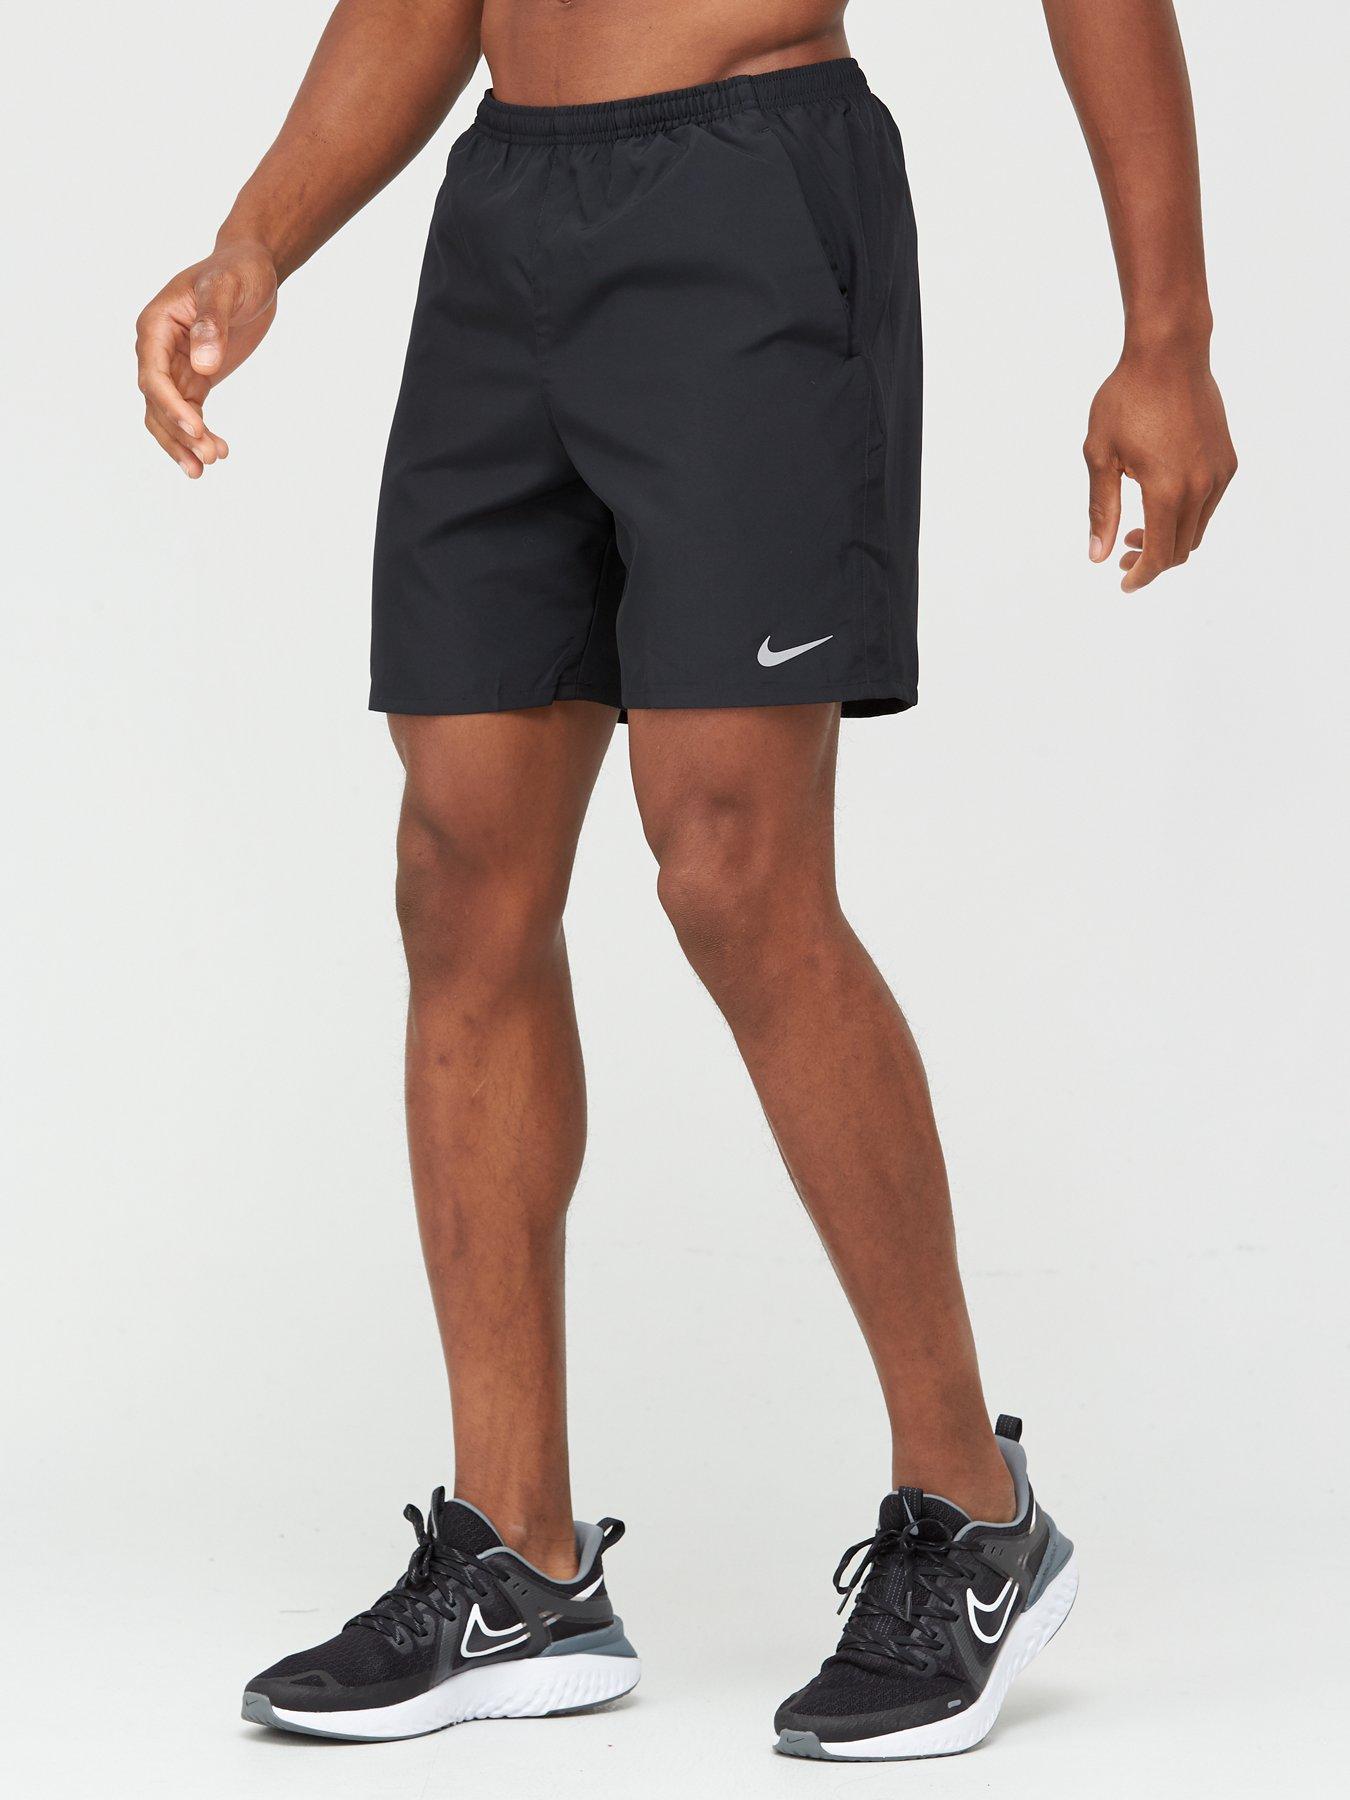 Men 7 Inch Running Shorts - Black